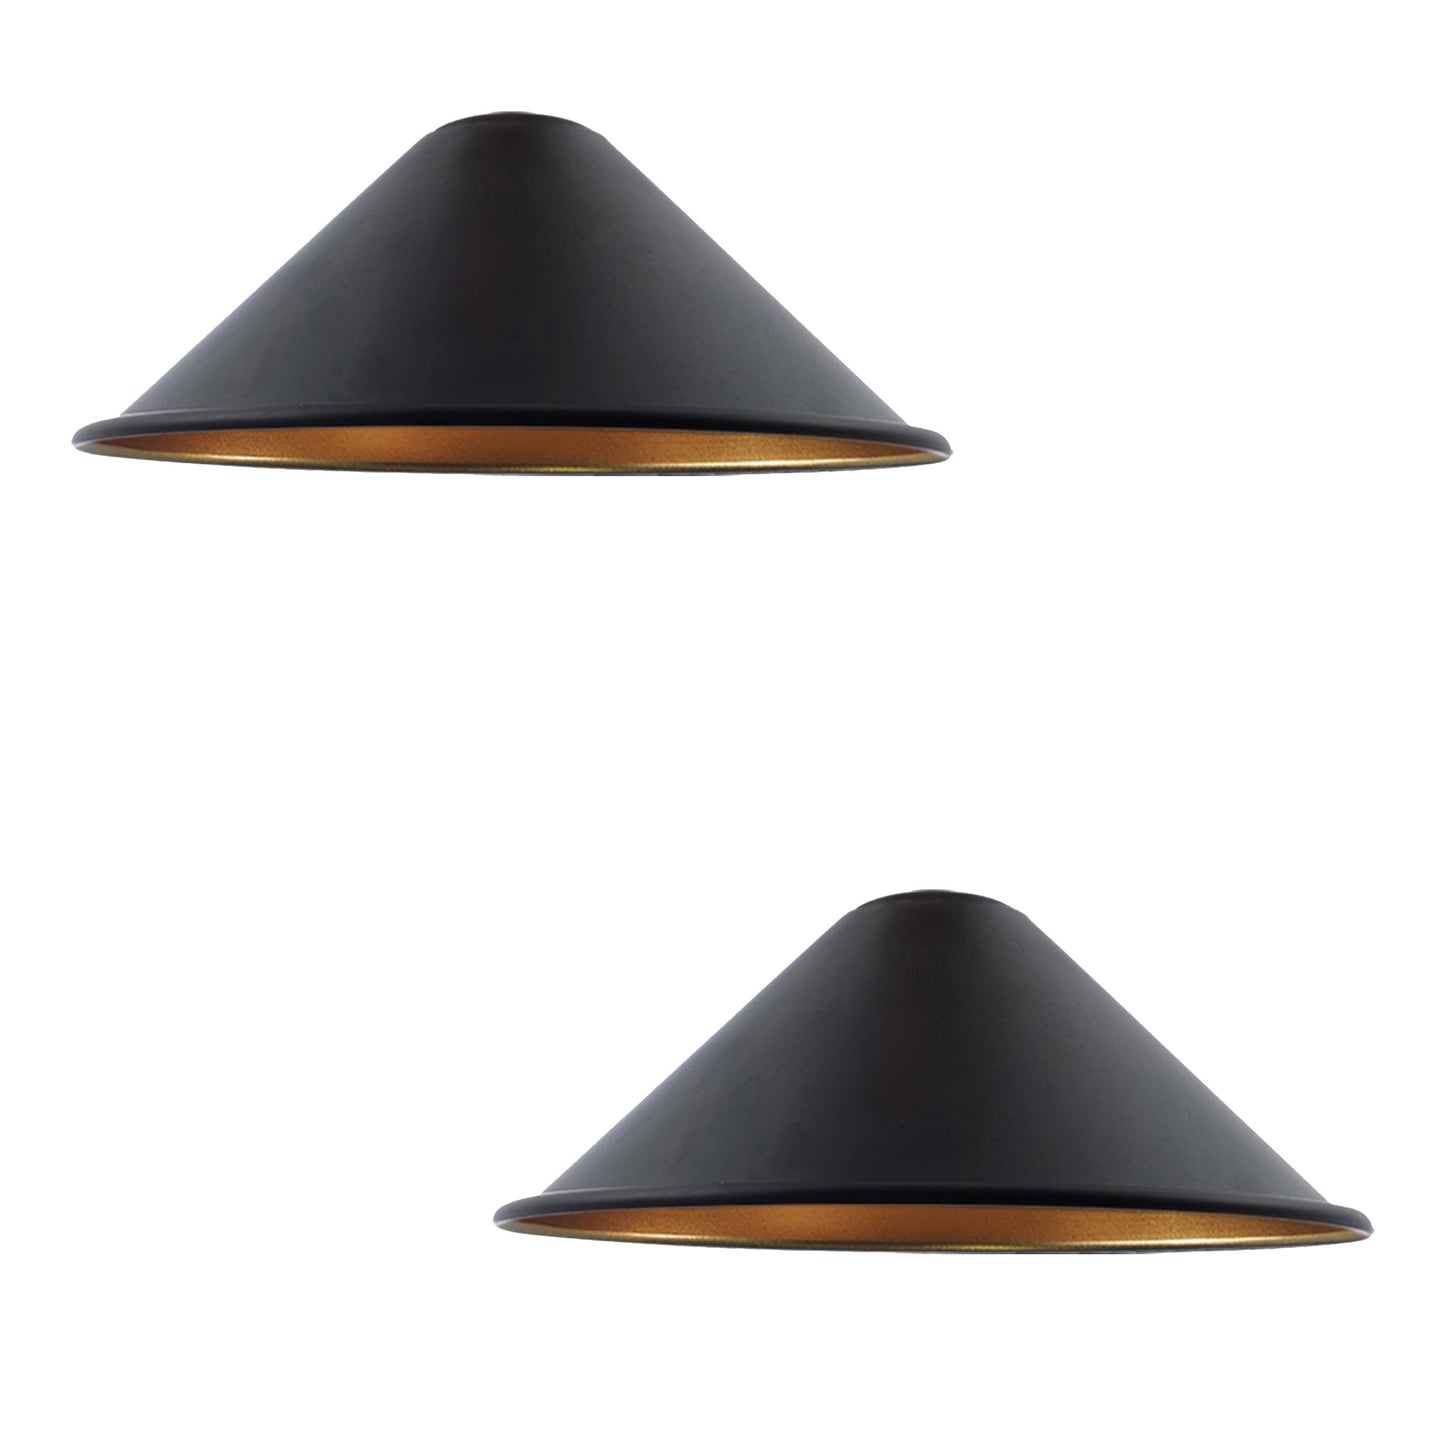 Modern Ceiling Pendant Light Shades Black Gold Inner Lamp Shades Easy Fit New~1612